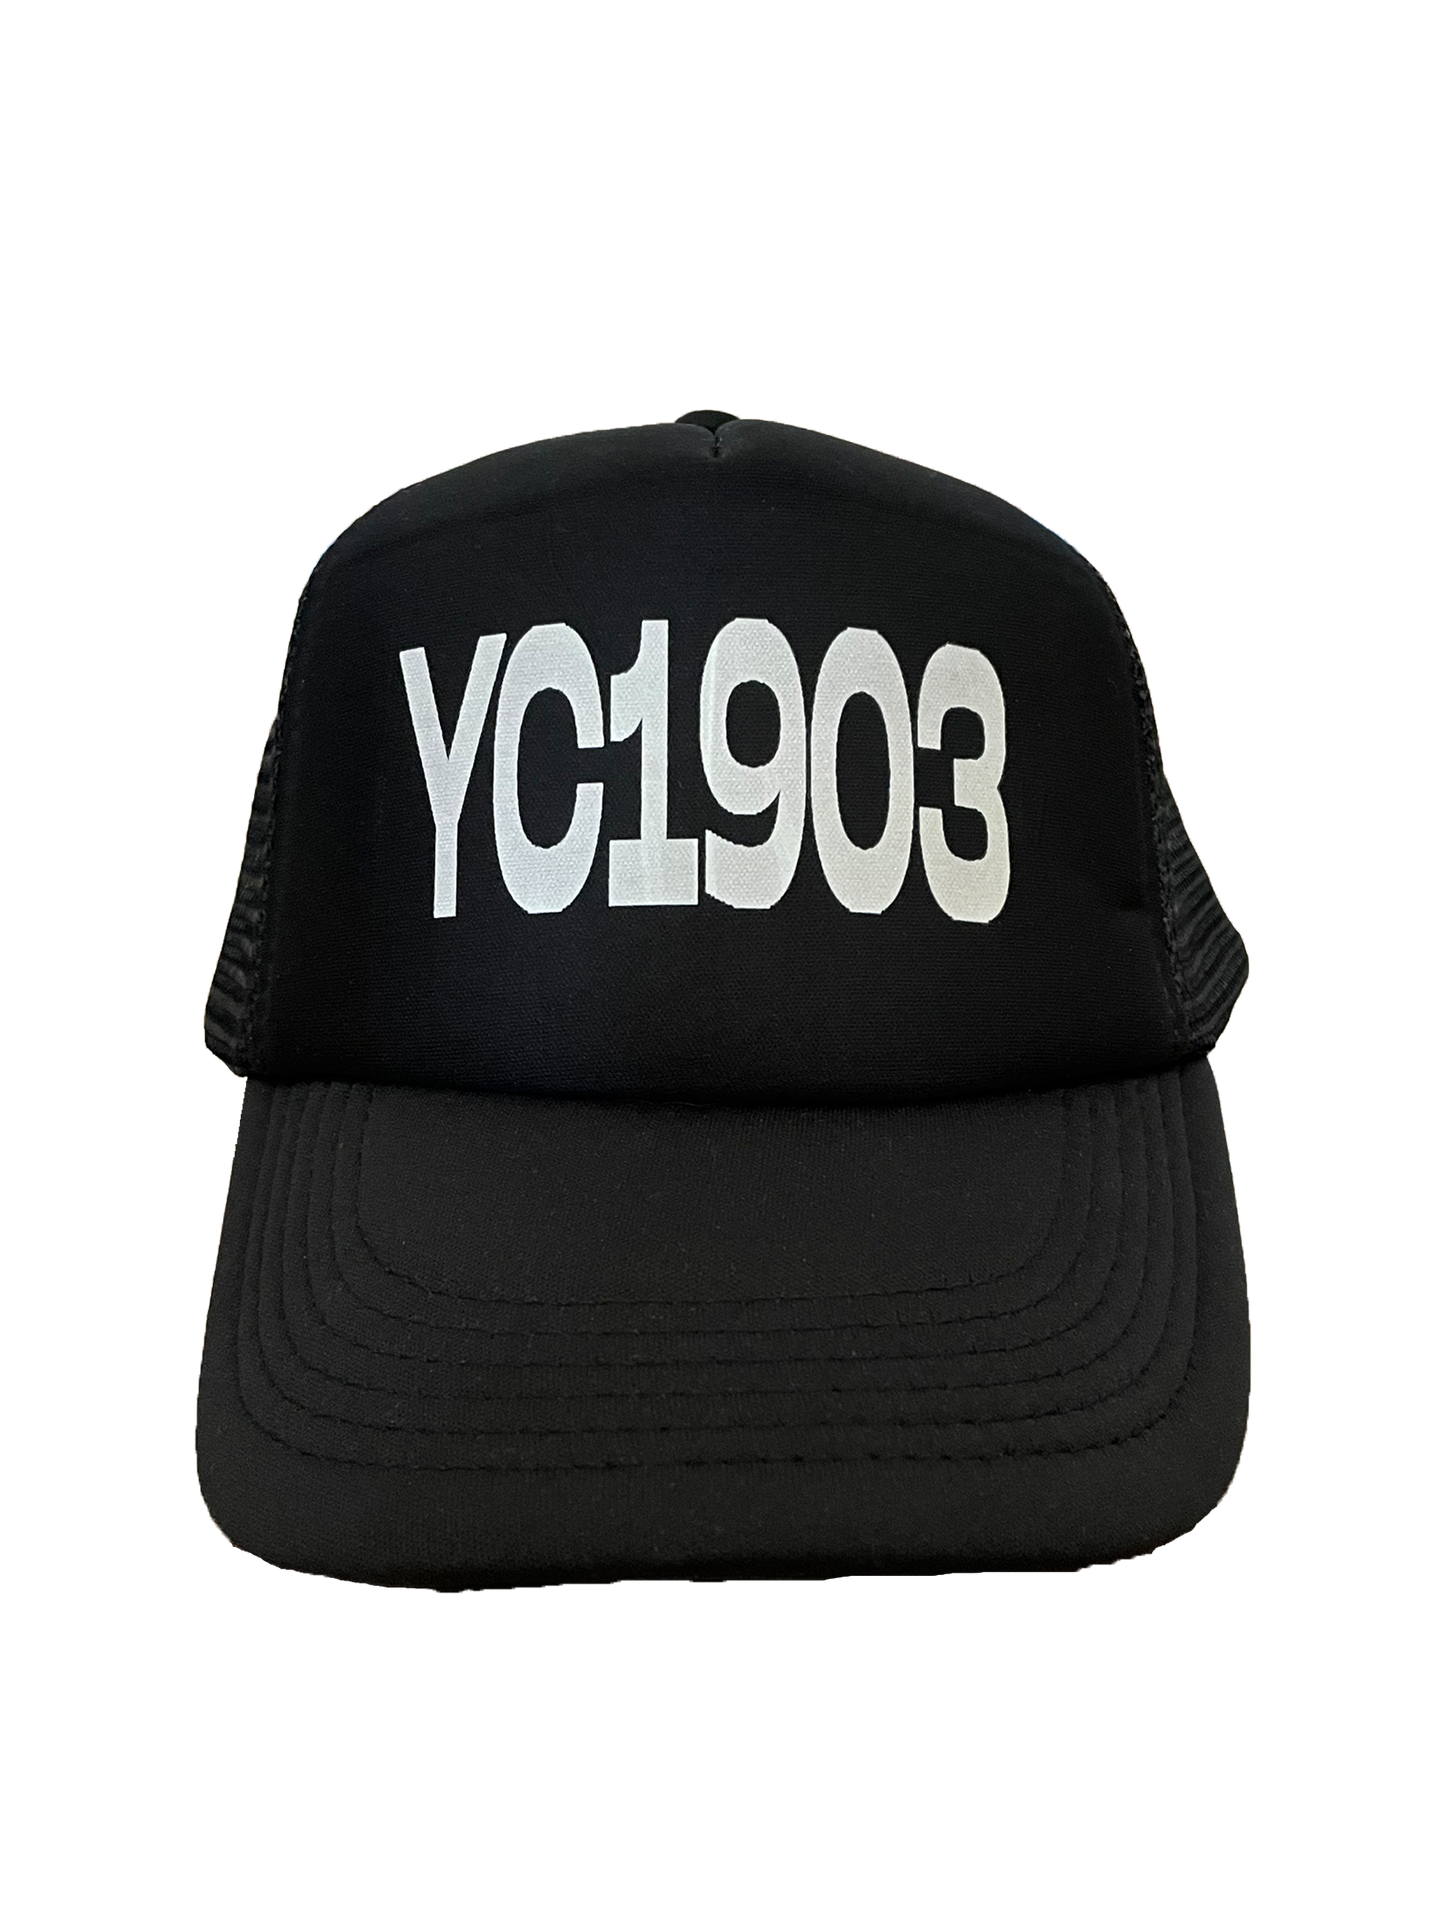 Malive YC1903 Cap